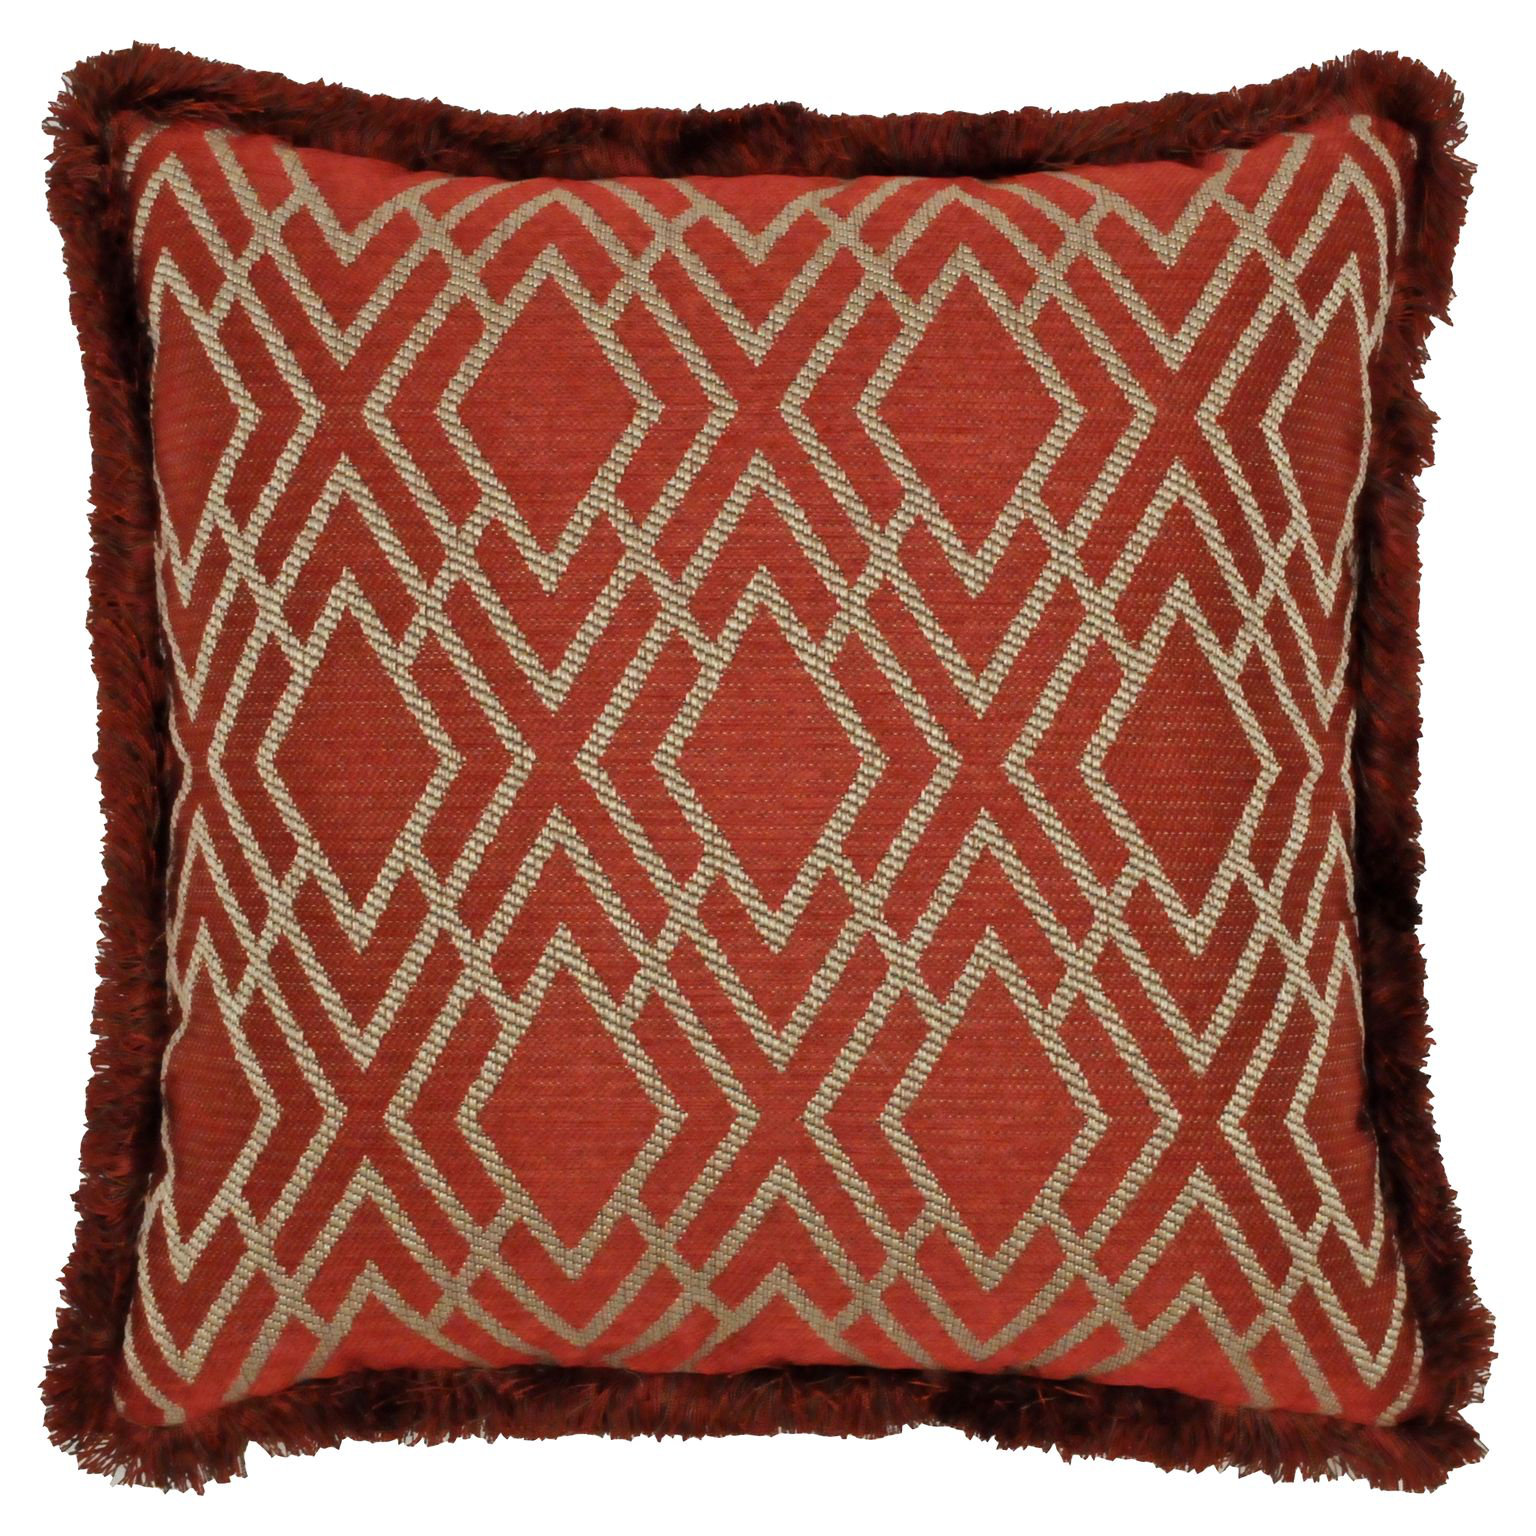 Cushion Covers in Farrah Paisley